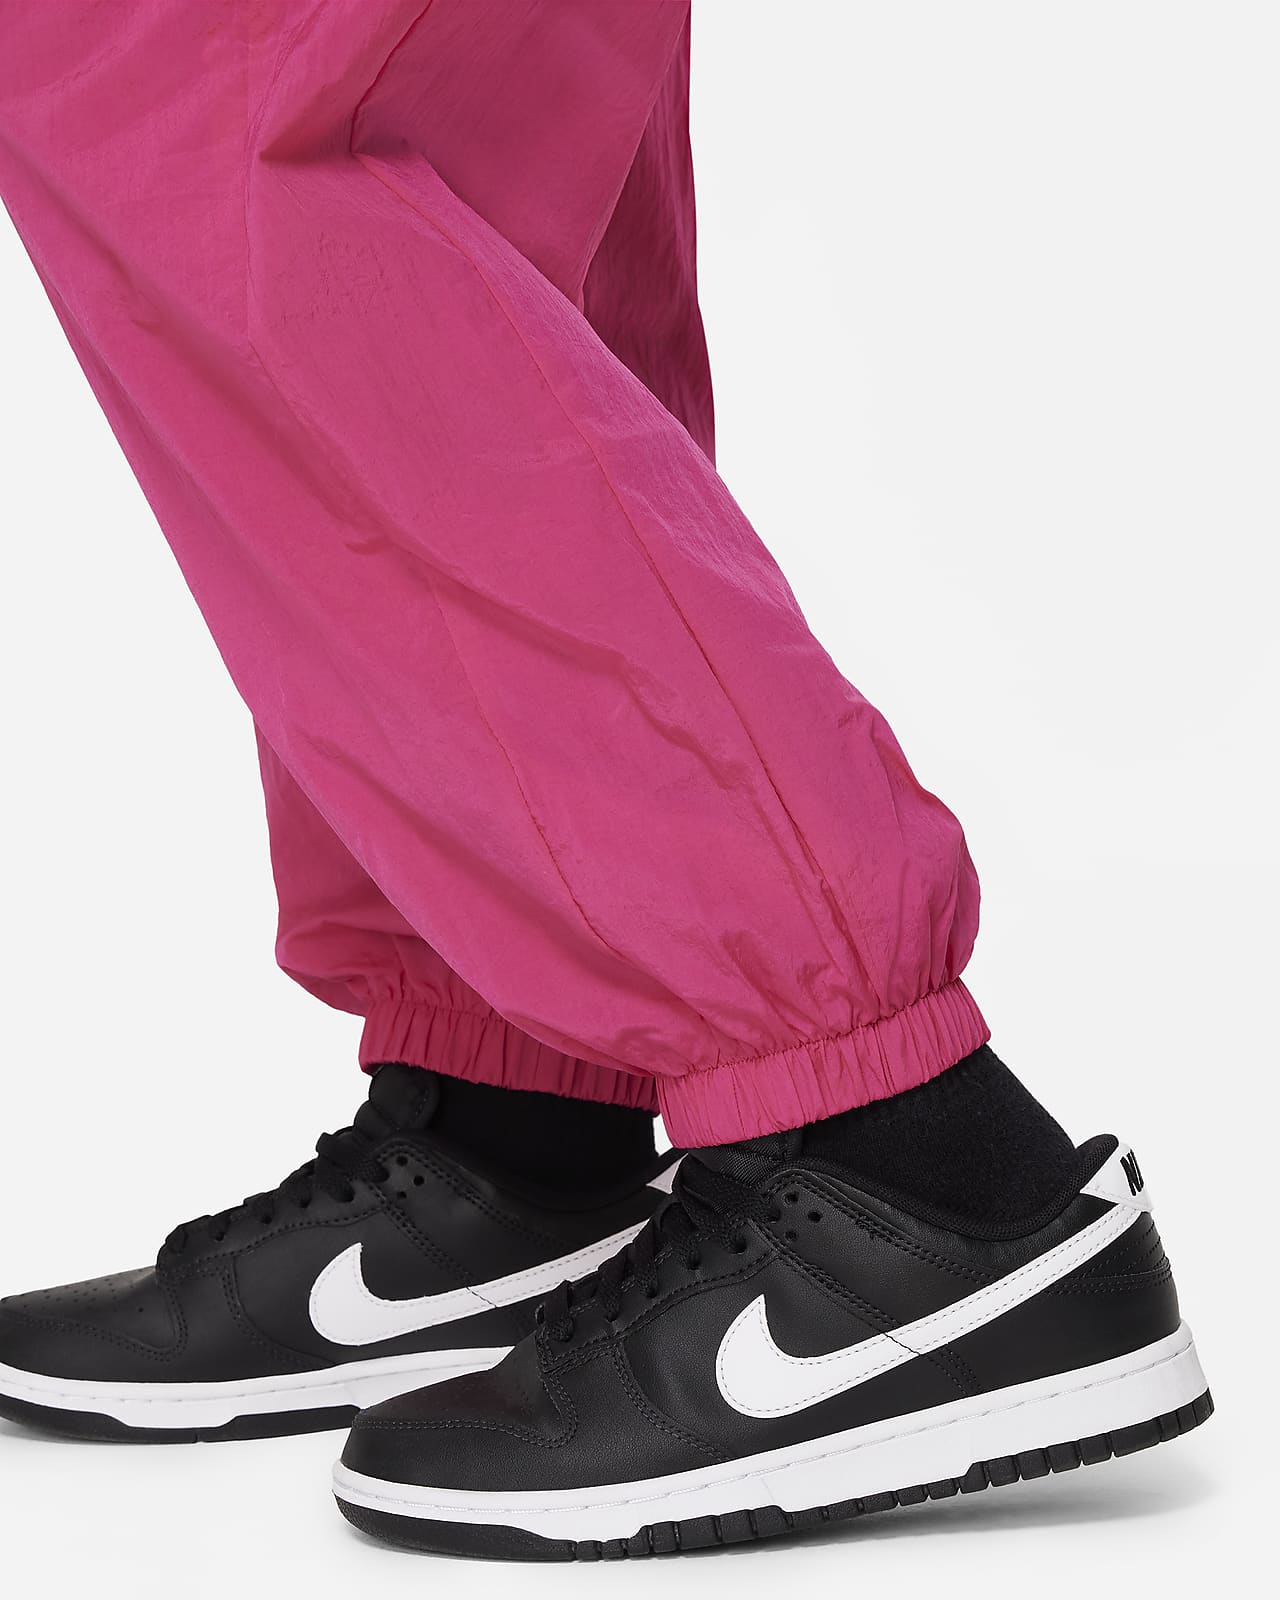 Nike Track Pants, Nike Track Pants Online NZ